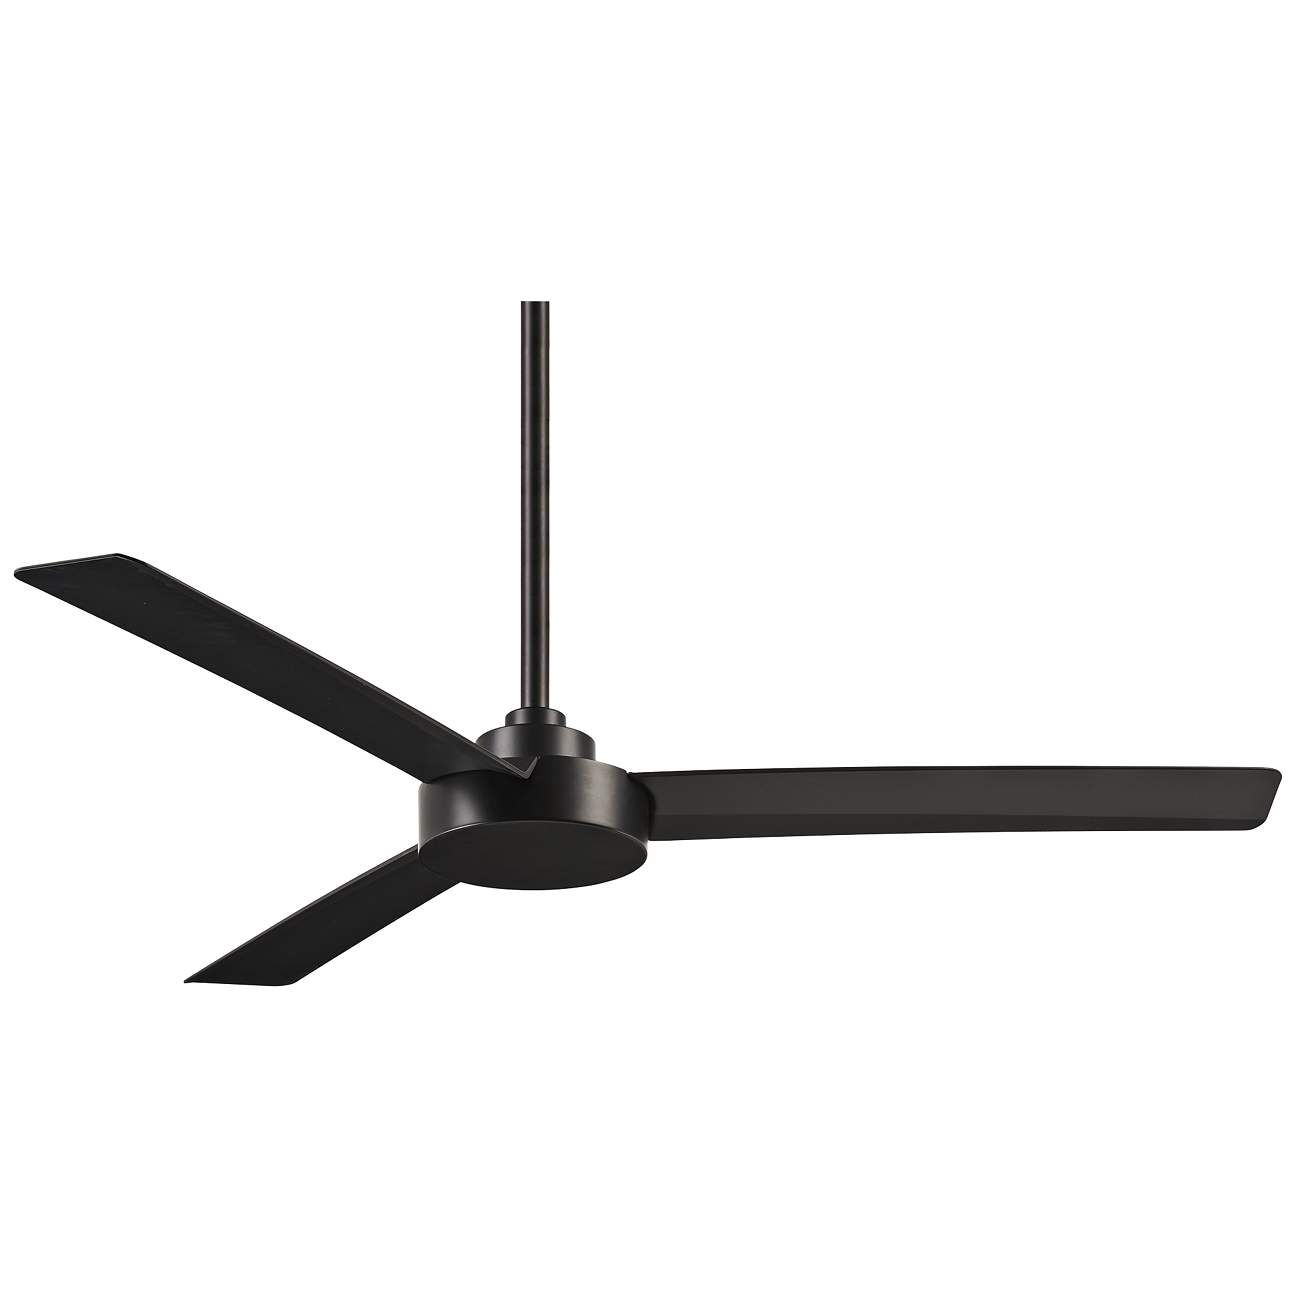 52" Minka Aire Roto Coal Ceiling Fan | LampsPlus.com